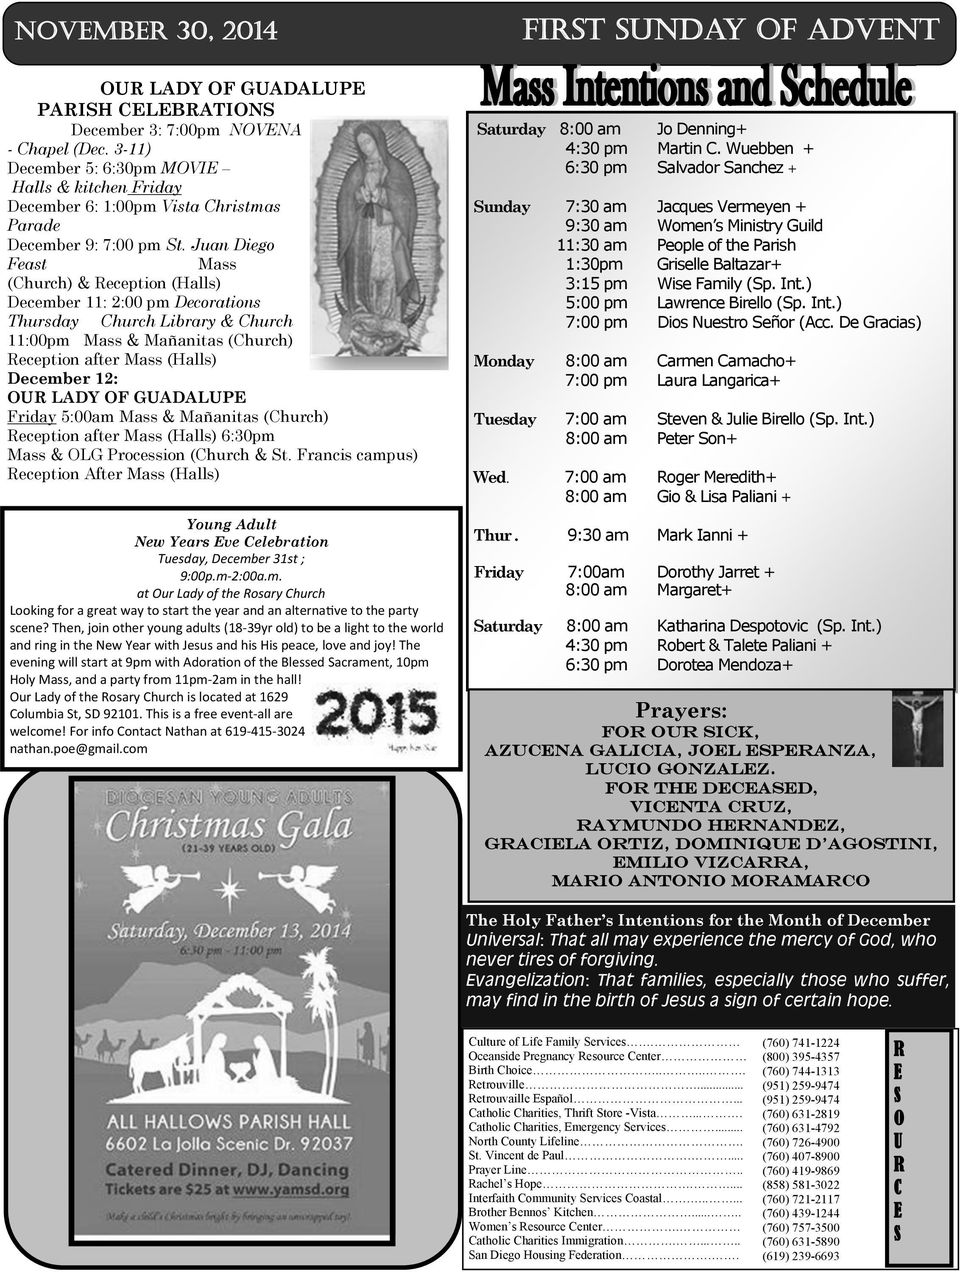 Juan Diego Feast Mass (Church) & Reception (Halls) December 11: 2:00 pm Decorations Thursday Church Library & Church 11:00pm Mass & Mañanitas (Church) Reception after Mass (Halls) December 12: OUR